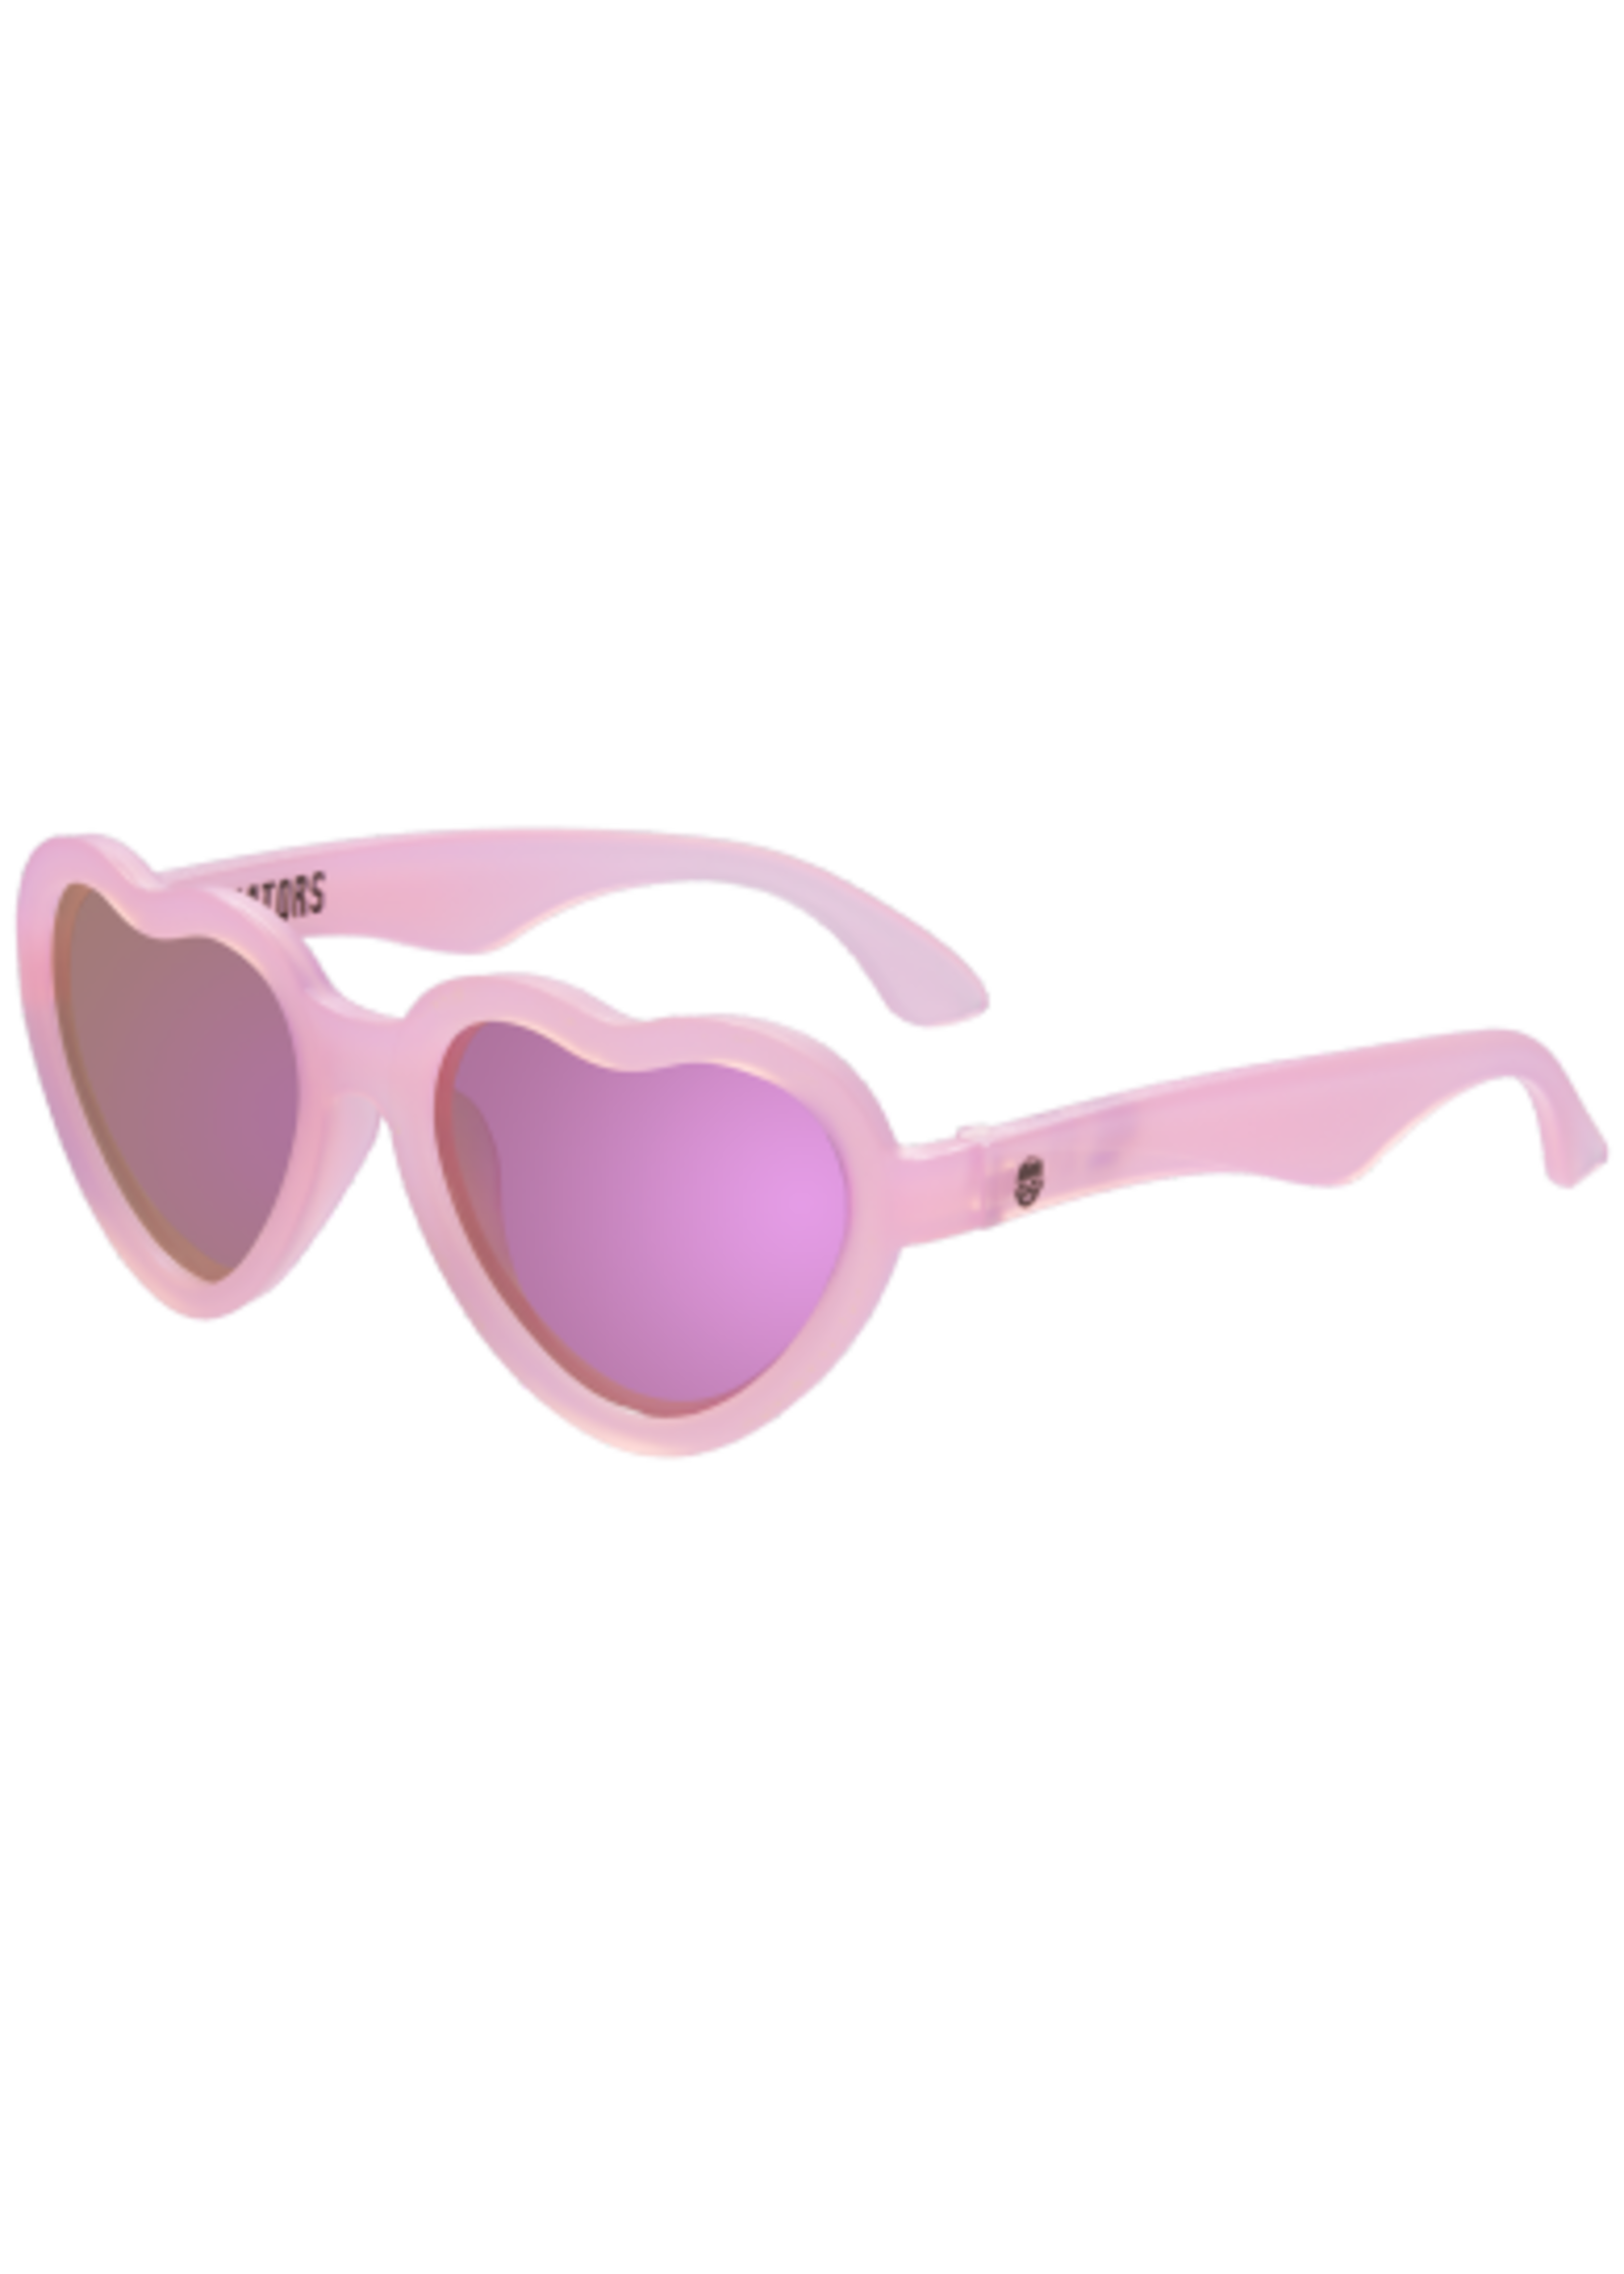 Babiators Sunglasses Influencer